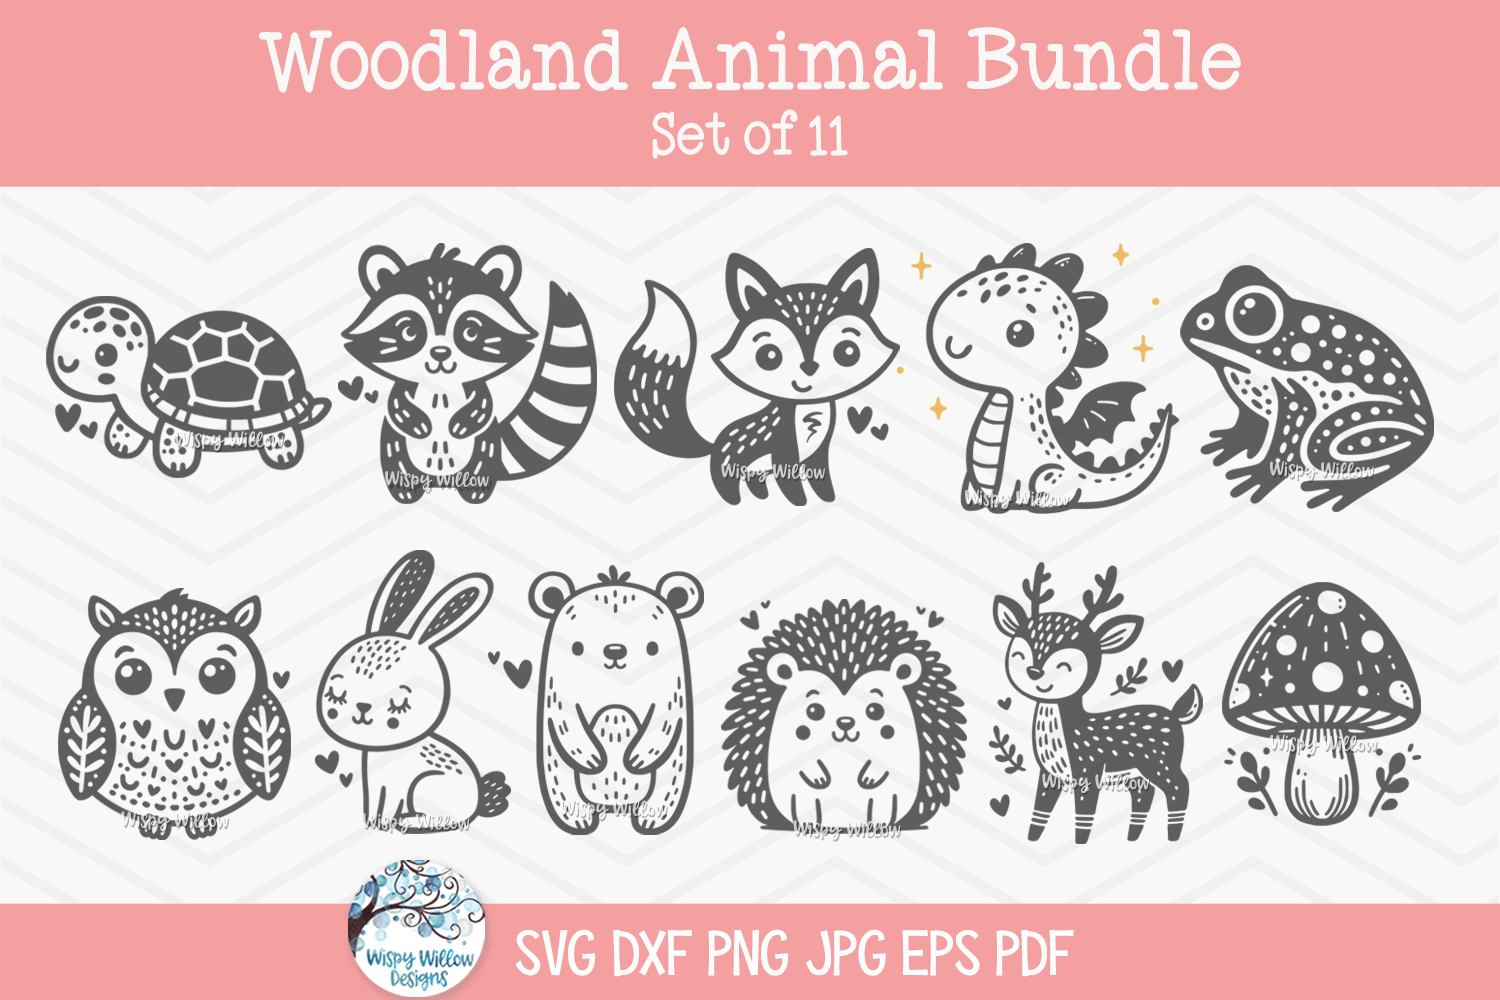 Woodland Animal Bundle SVG | Baby Shower Woodland Animal Designs - Turtle, Raccoon, Fox, Dragon, Frog, Owl, Bunny Rabbit, Bear, Hedgehog, Deer Wispy Willow Designs Company